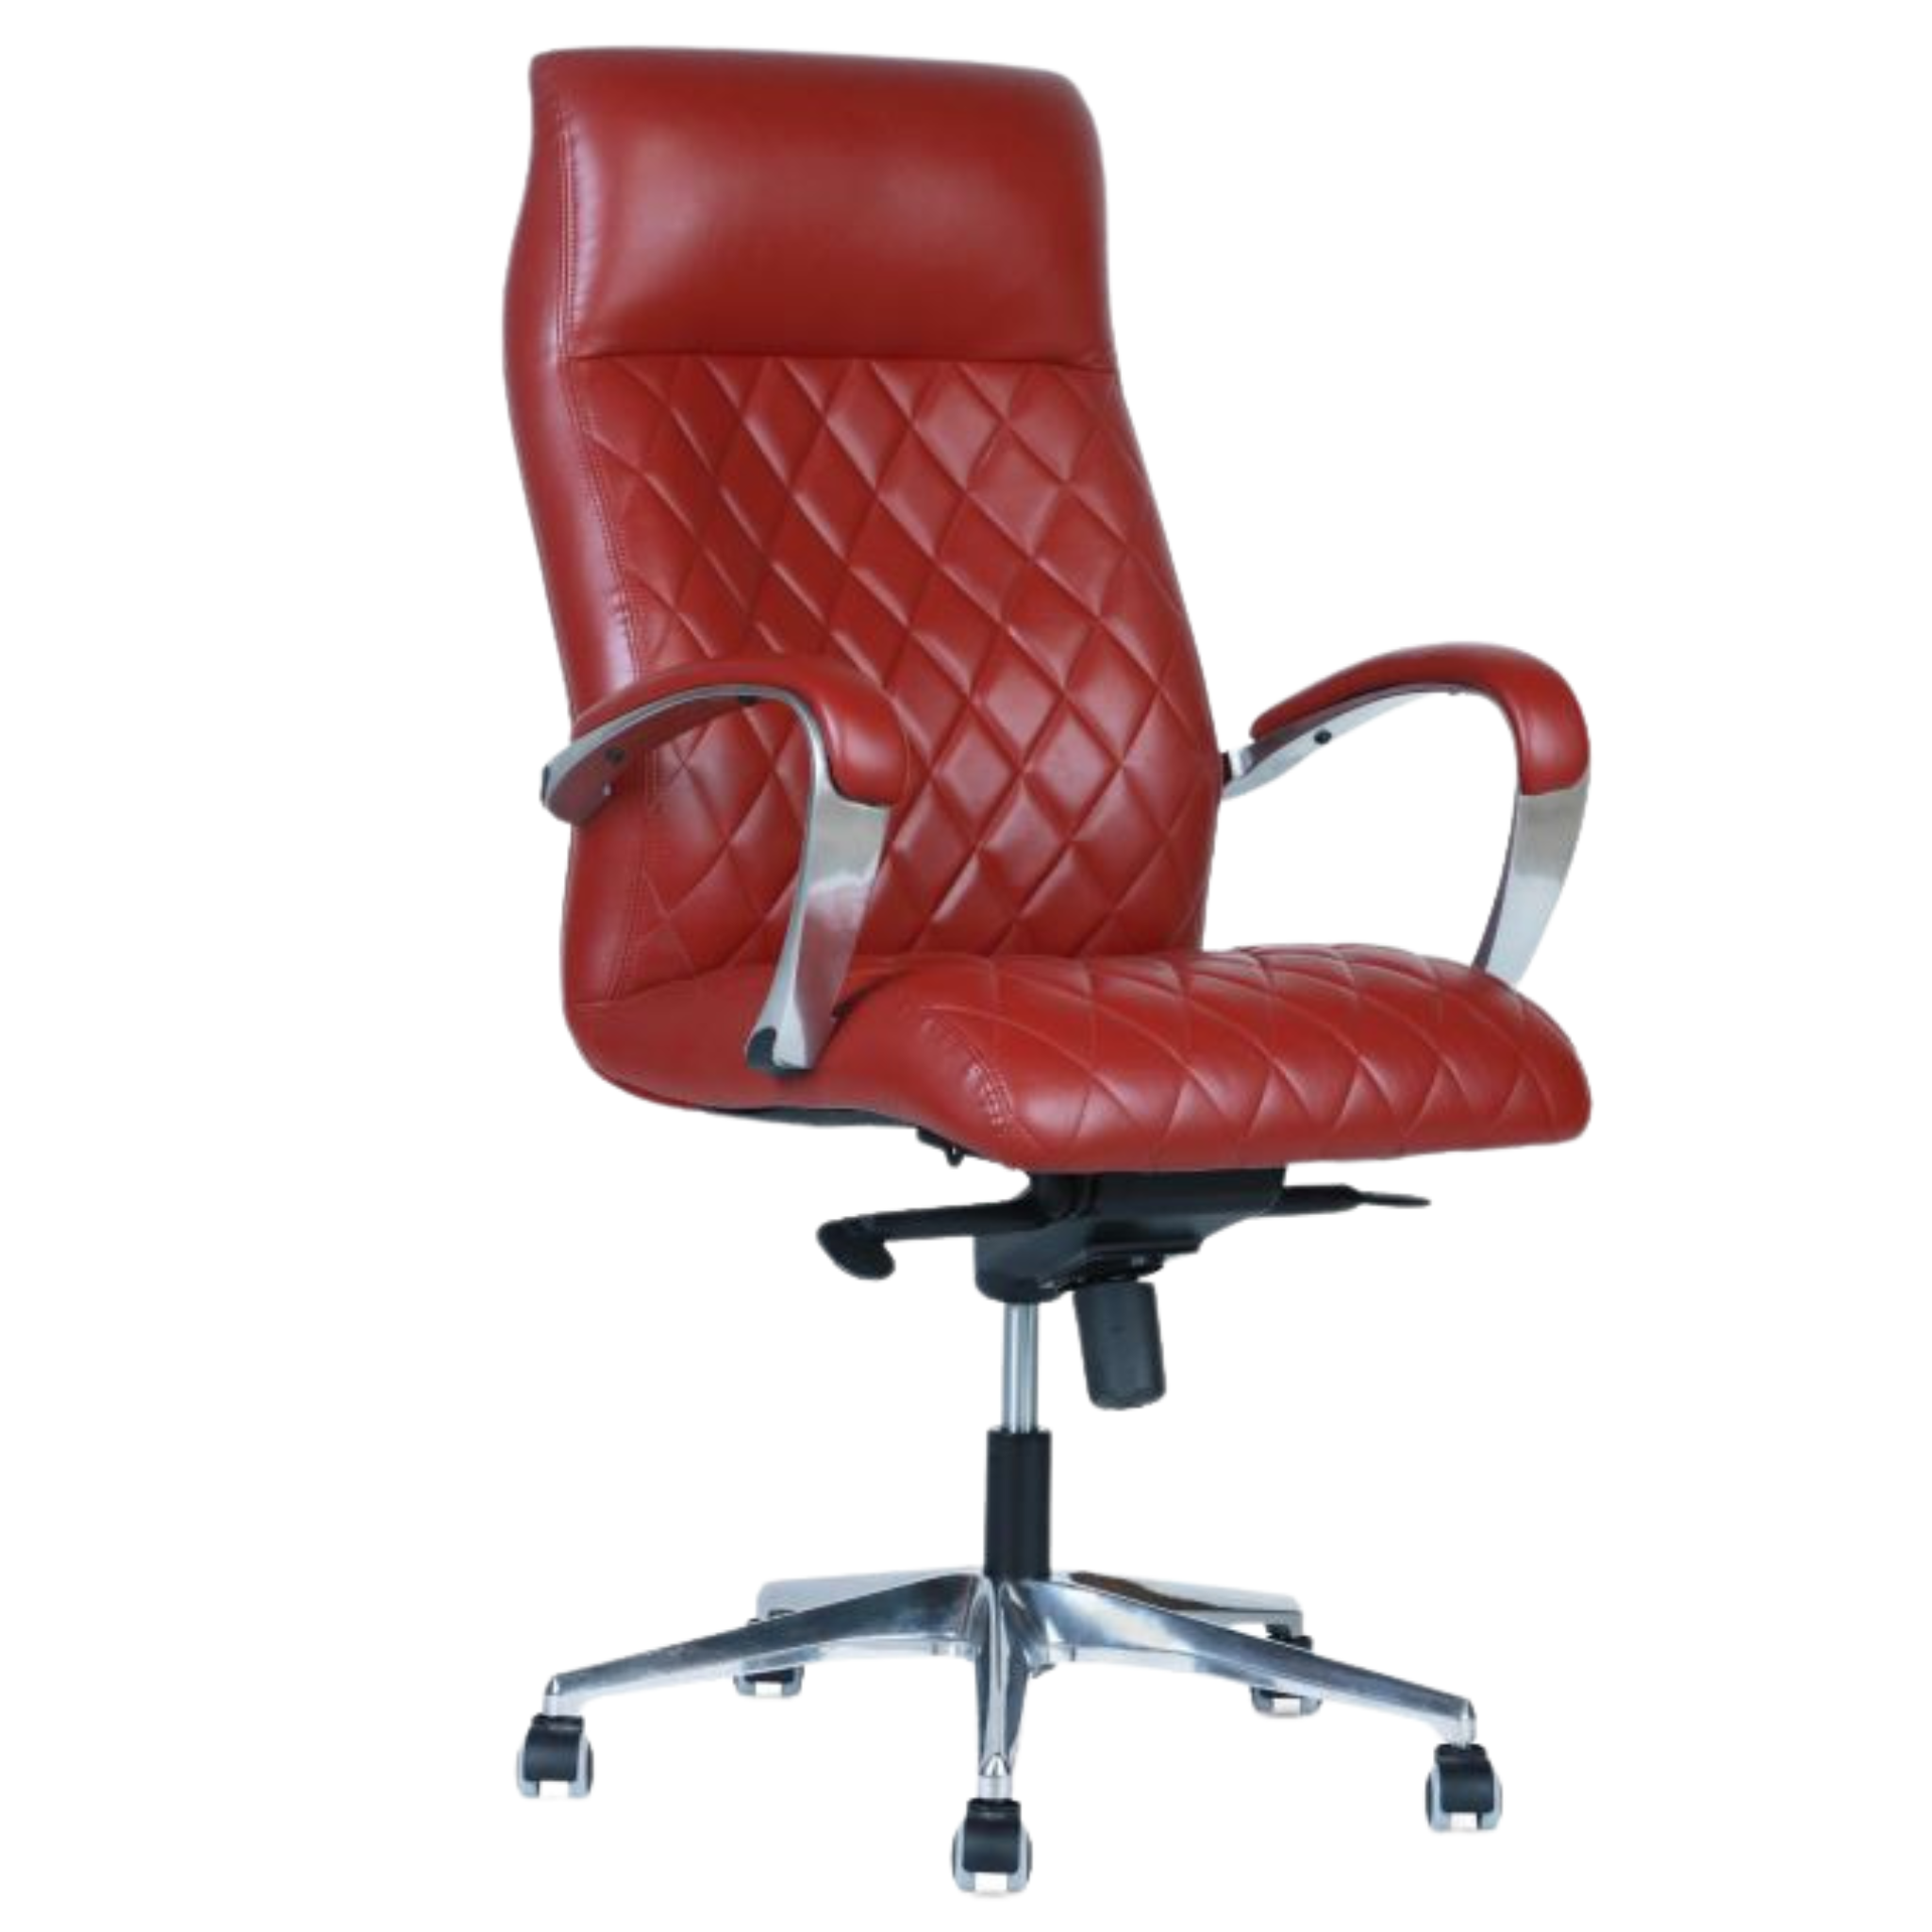 Evan Artificial Leather High Back Premium Executive Chair